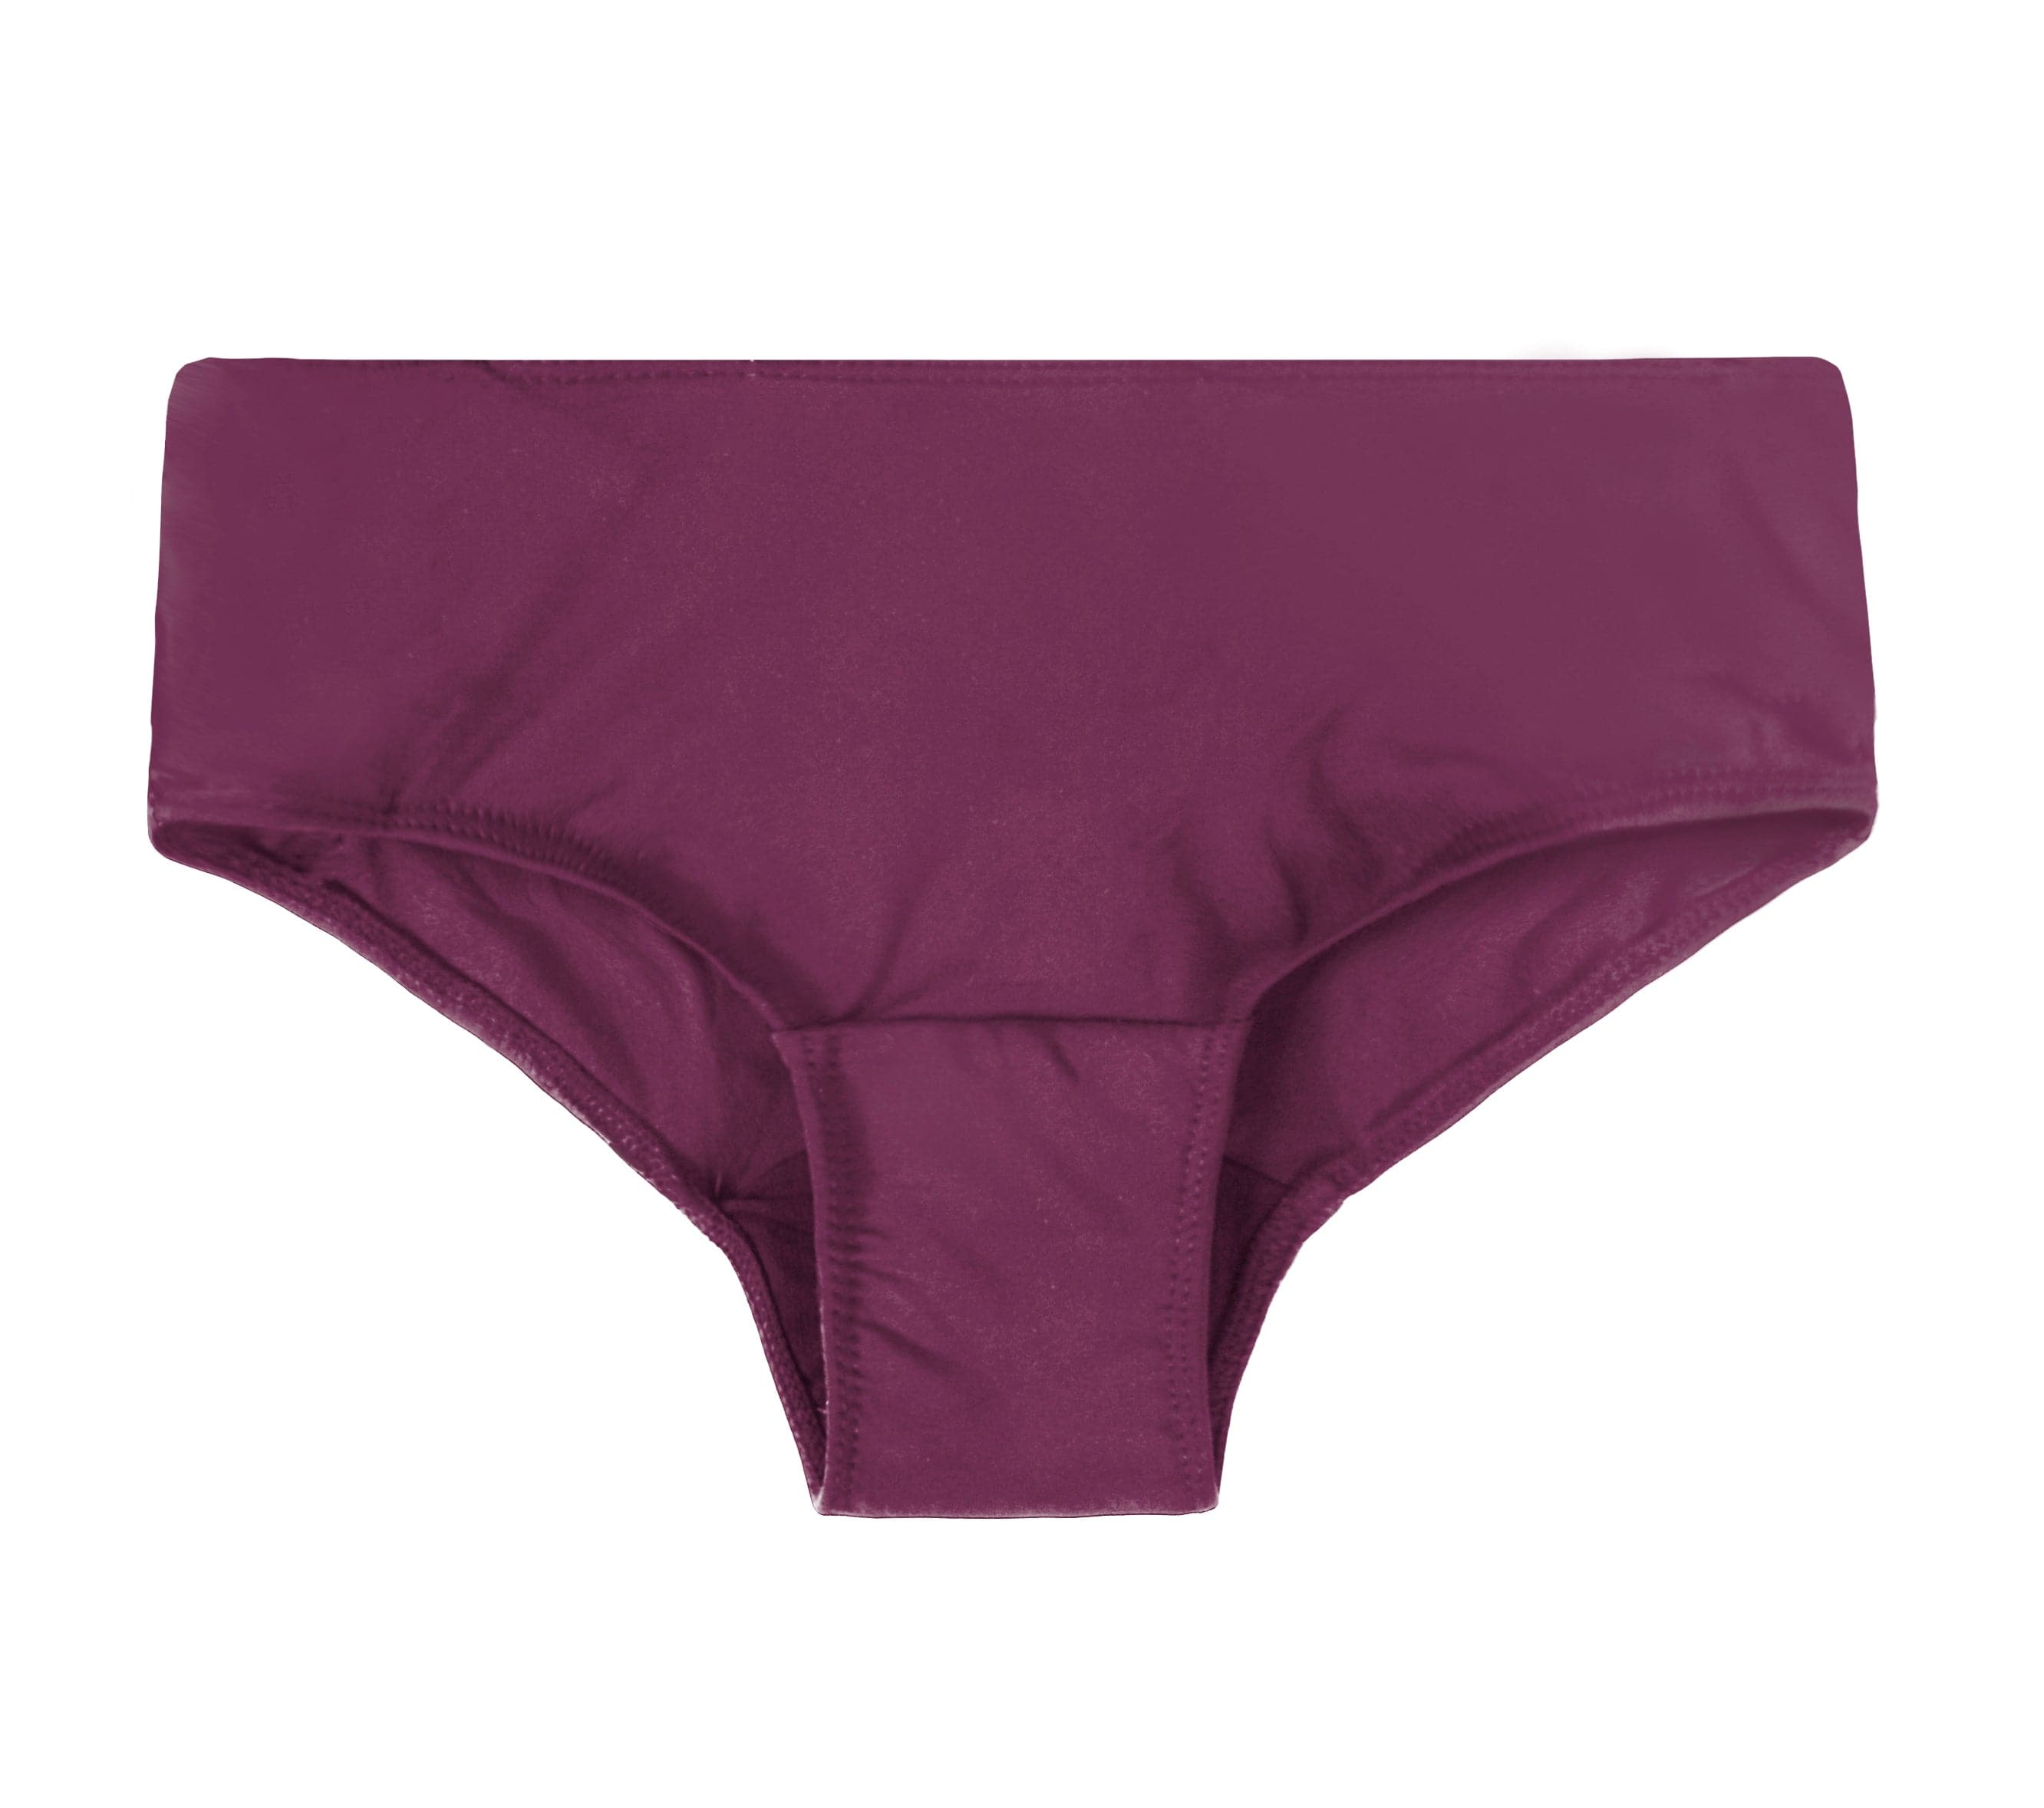 Ruby Love Period Underwear & Swimwear New Review 💕 